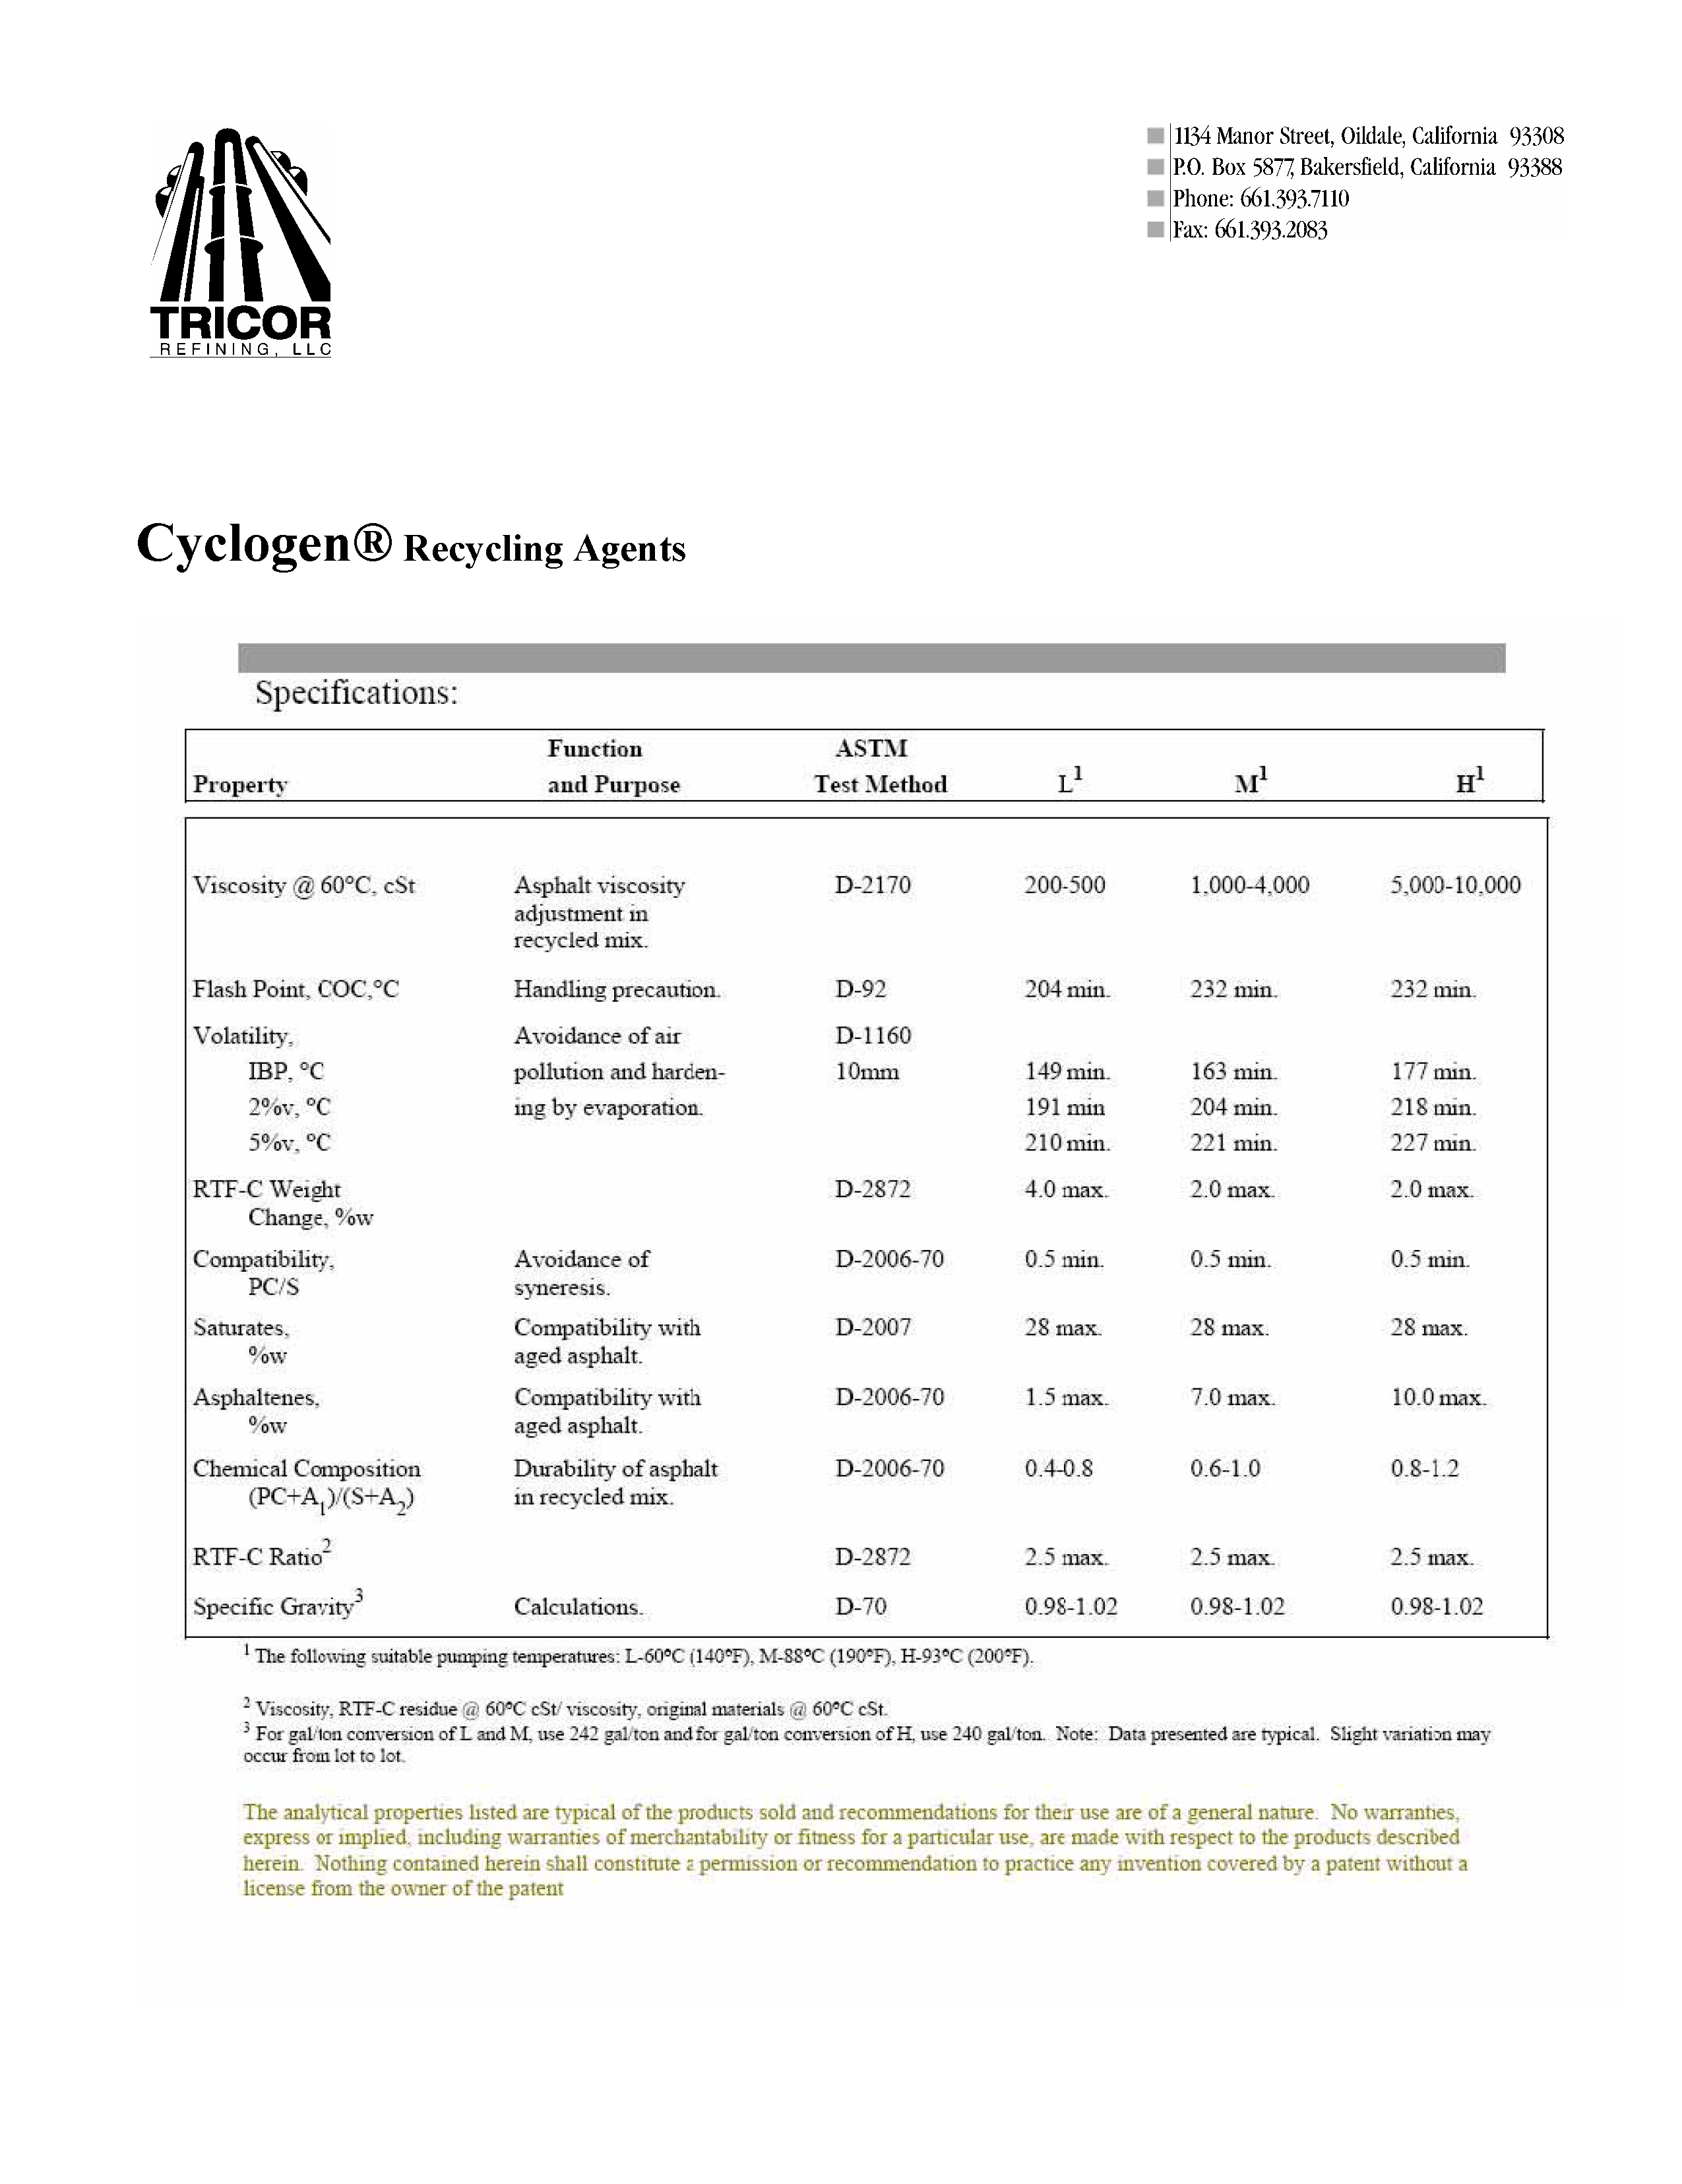 Cyclogen specifications